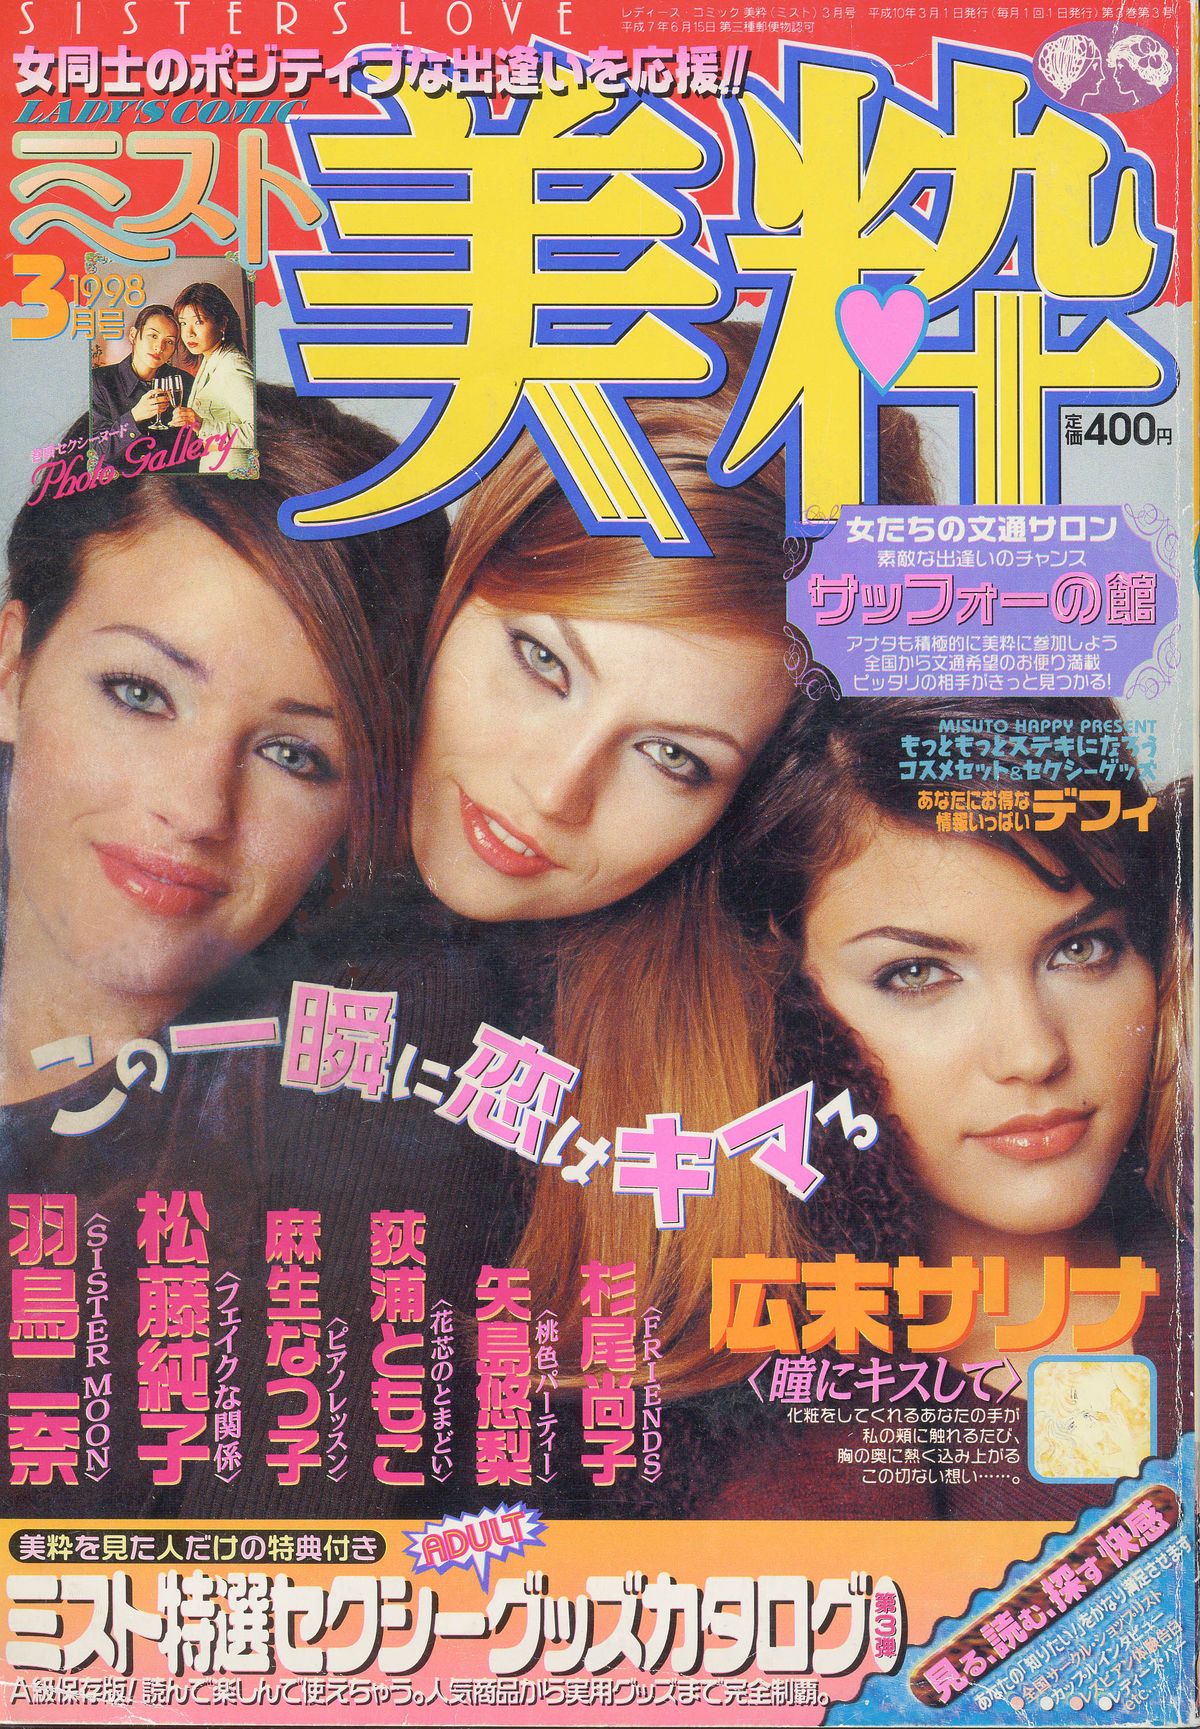 [Hisako Sugio] Friends (Mist Magazine 3/08) 